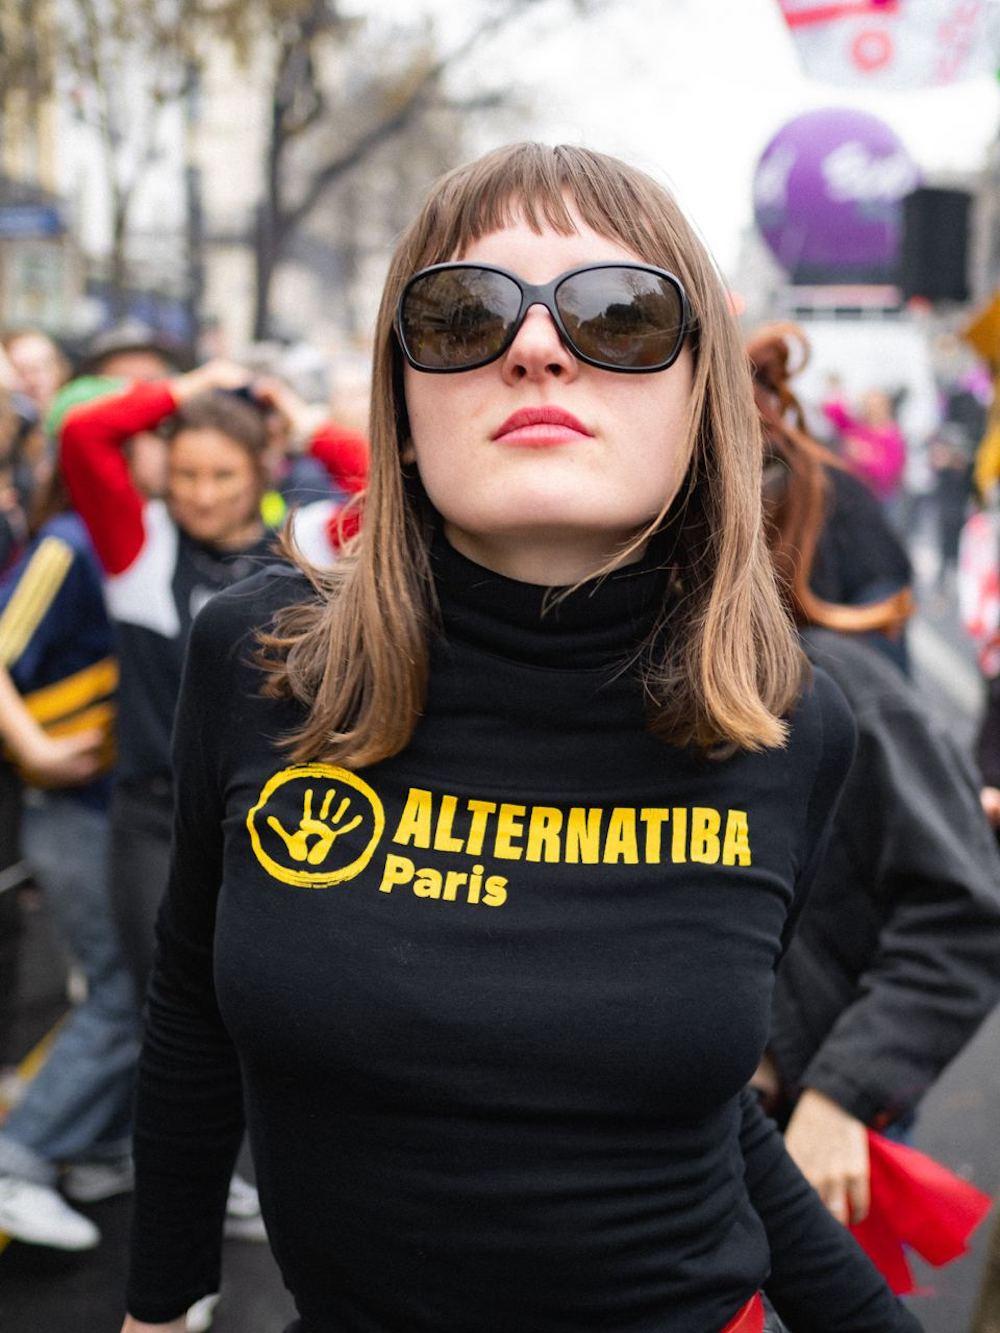 Mathilde Caillard poses in black sunglasses and an Alternatiba Paris turtleneck.